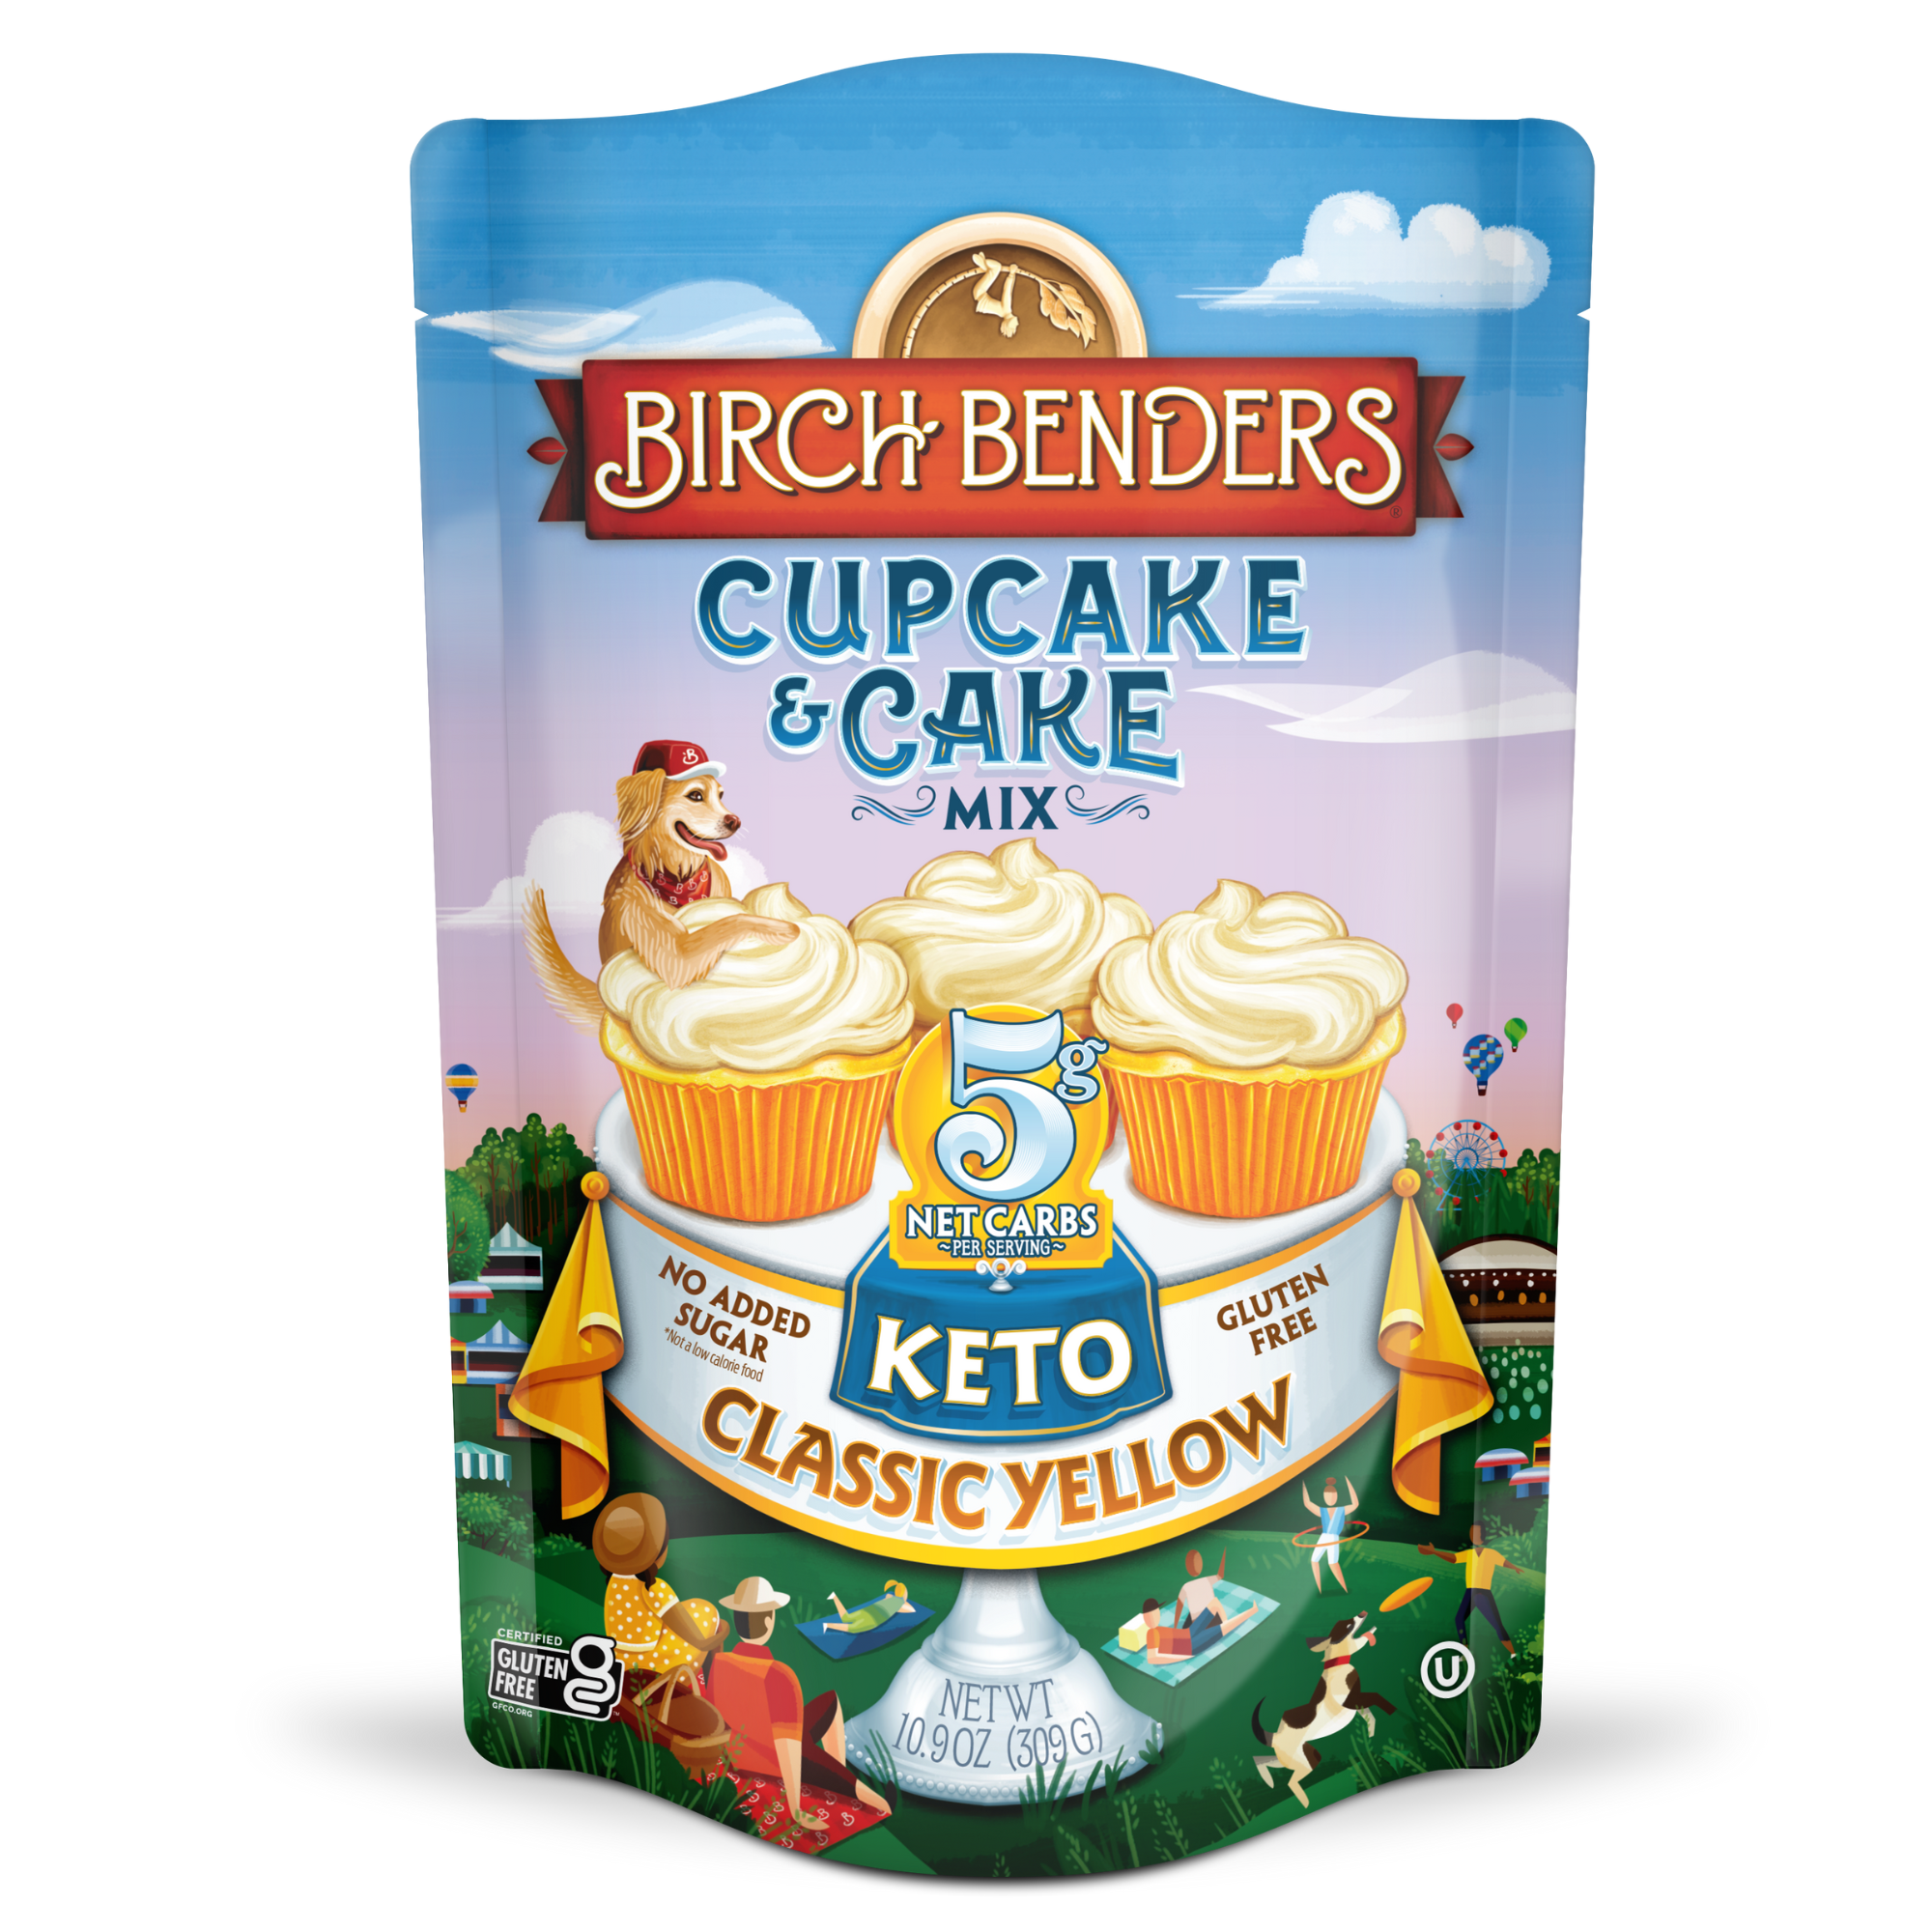 Birch Benders Keto Classic Yellow Cake Mix, 10.9oz - image 1 of 4